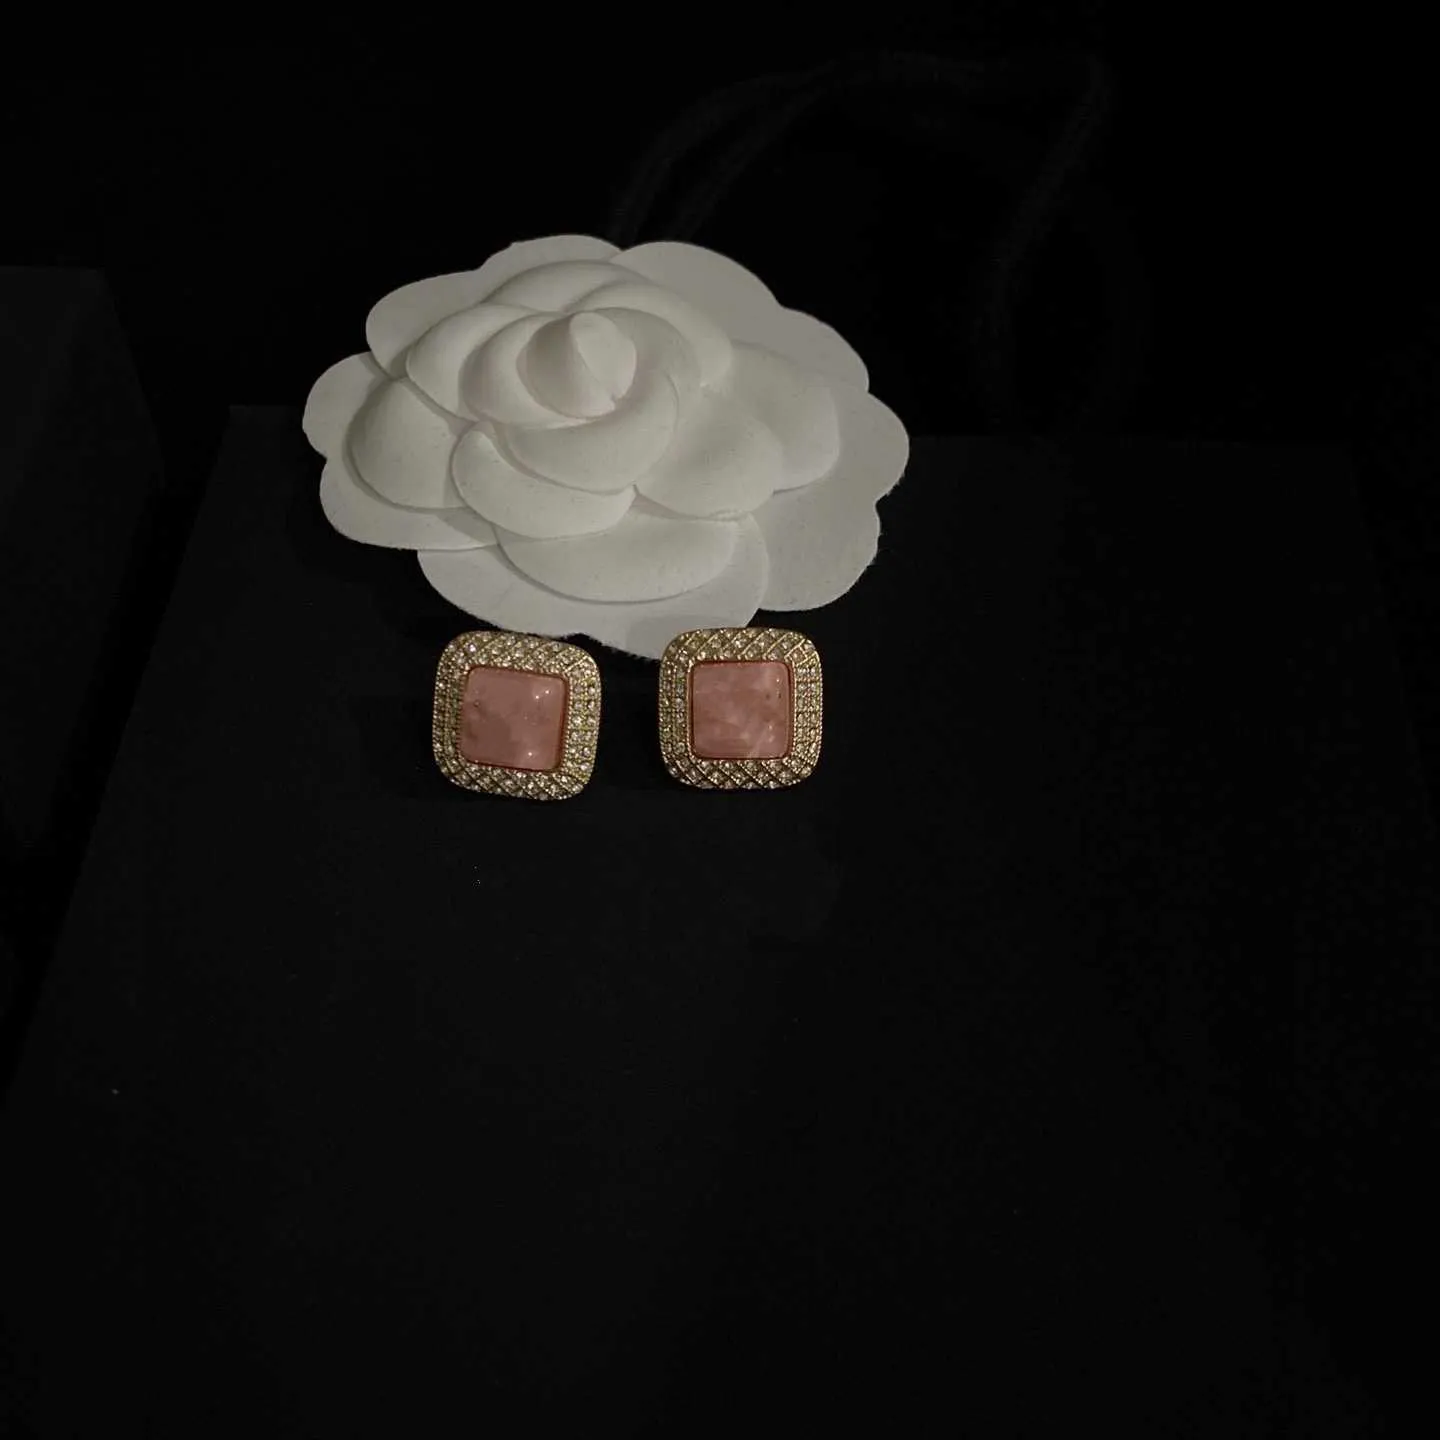 Top 2021 Nieuwe Merk Mode-sieraden Voor Vrouwen Roze Hars Ontwerp Party Licht Goud Kleur C Naam Stempel Crystal Stud Earrings2379228